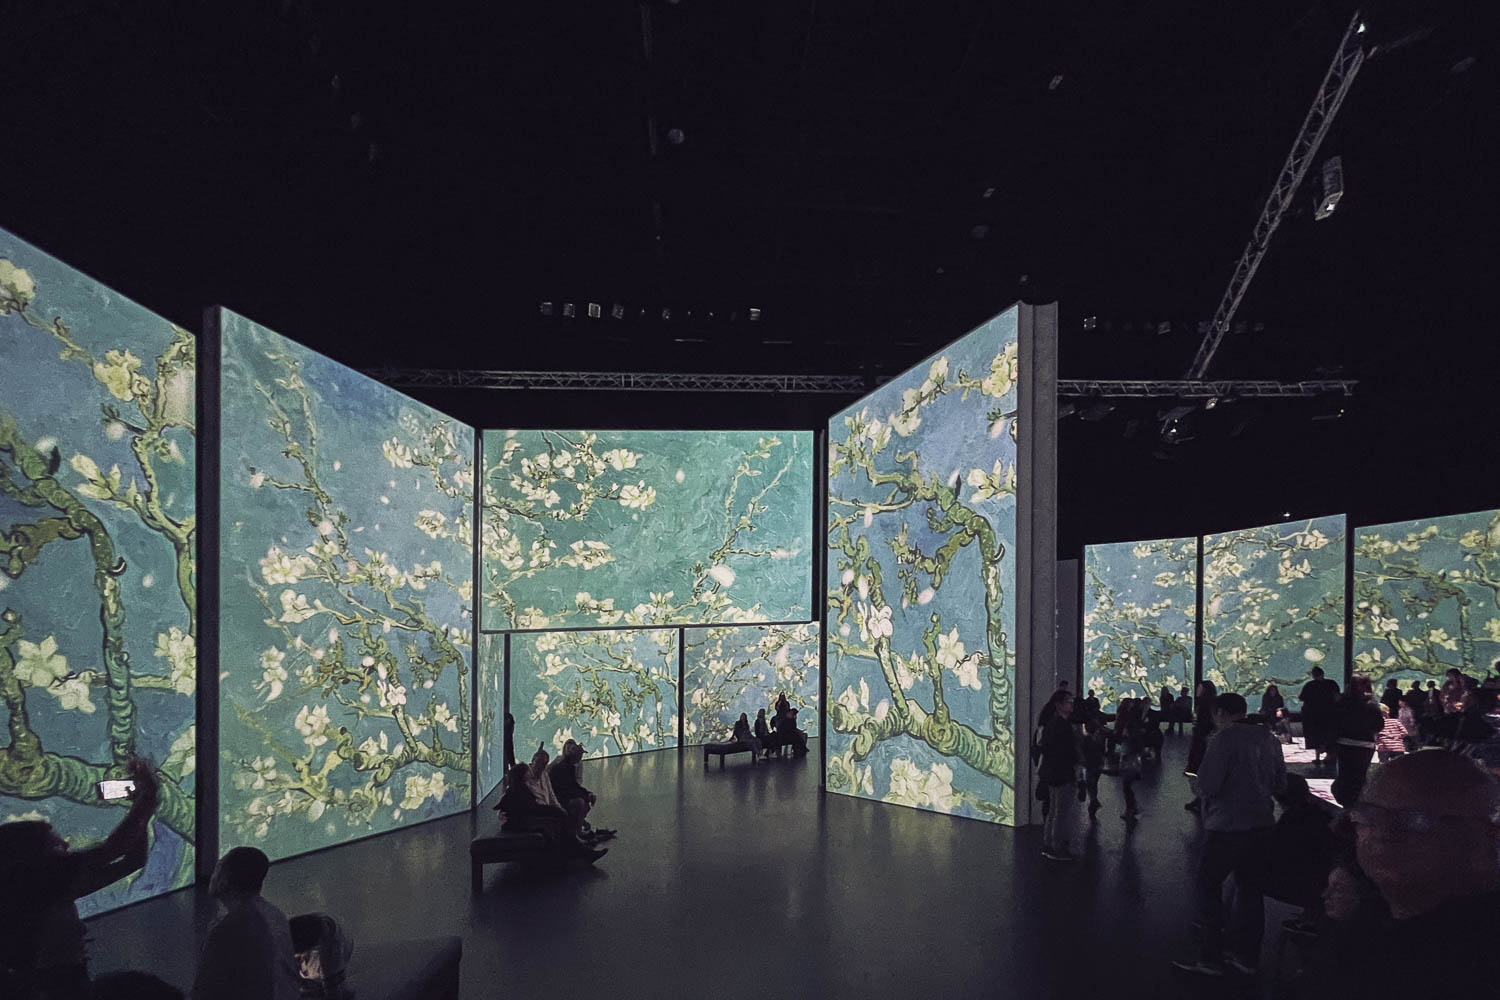 van gogh alive interactive exhibition showing screens of his work